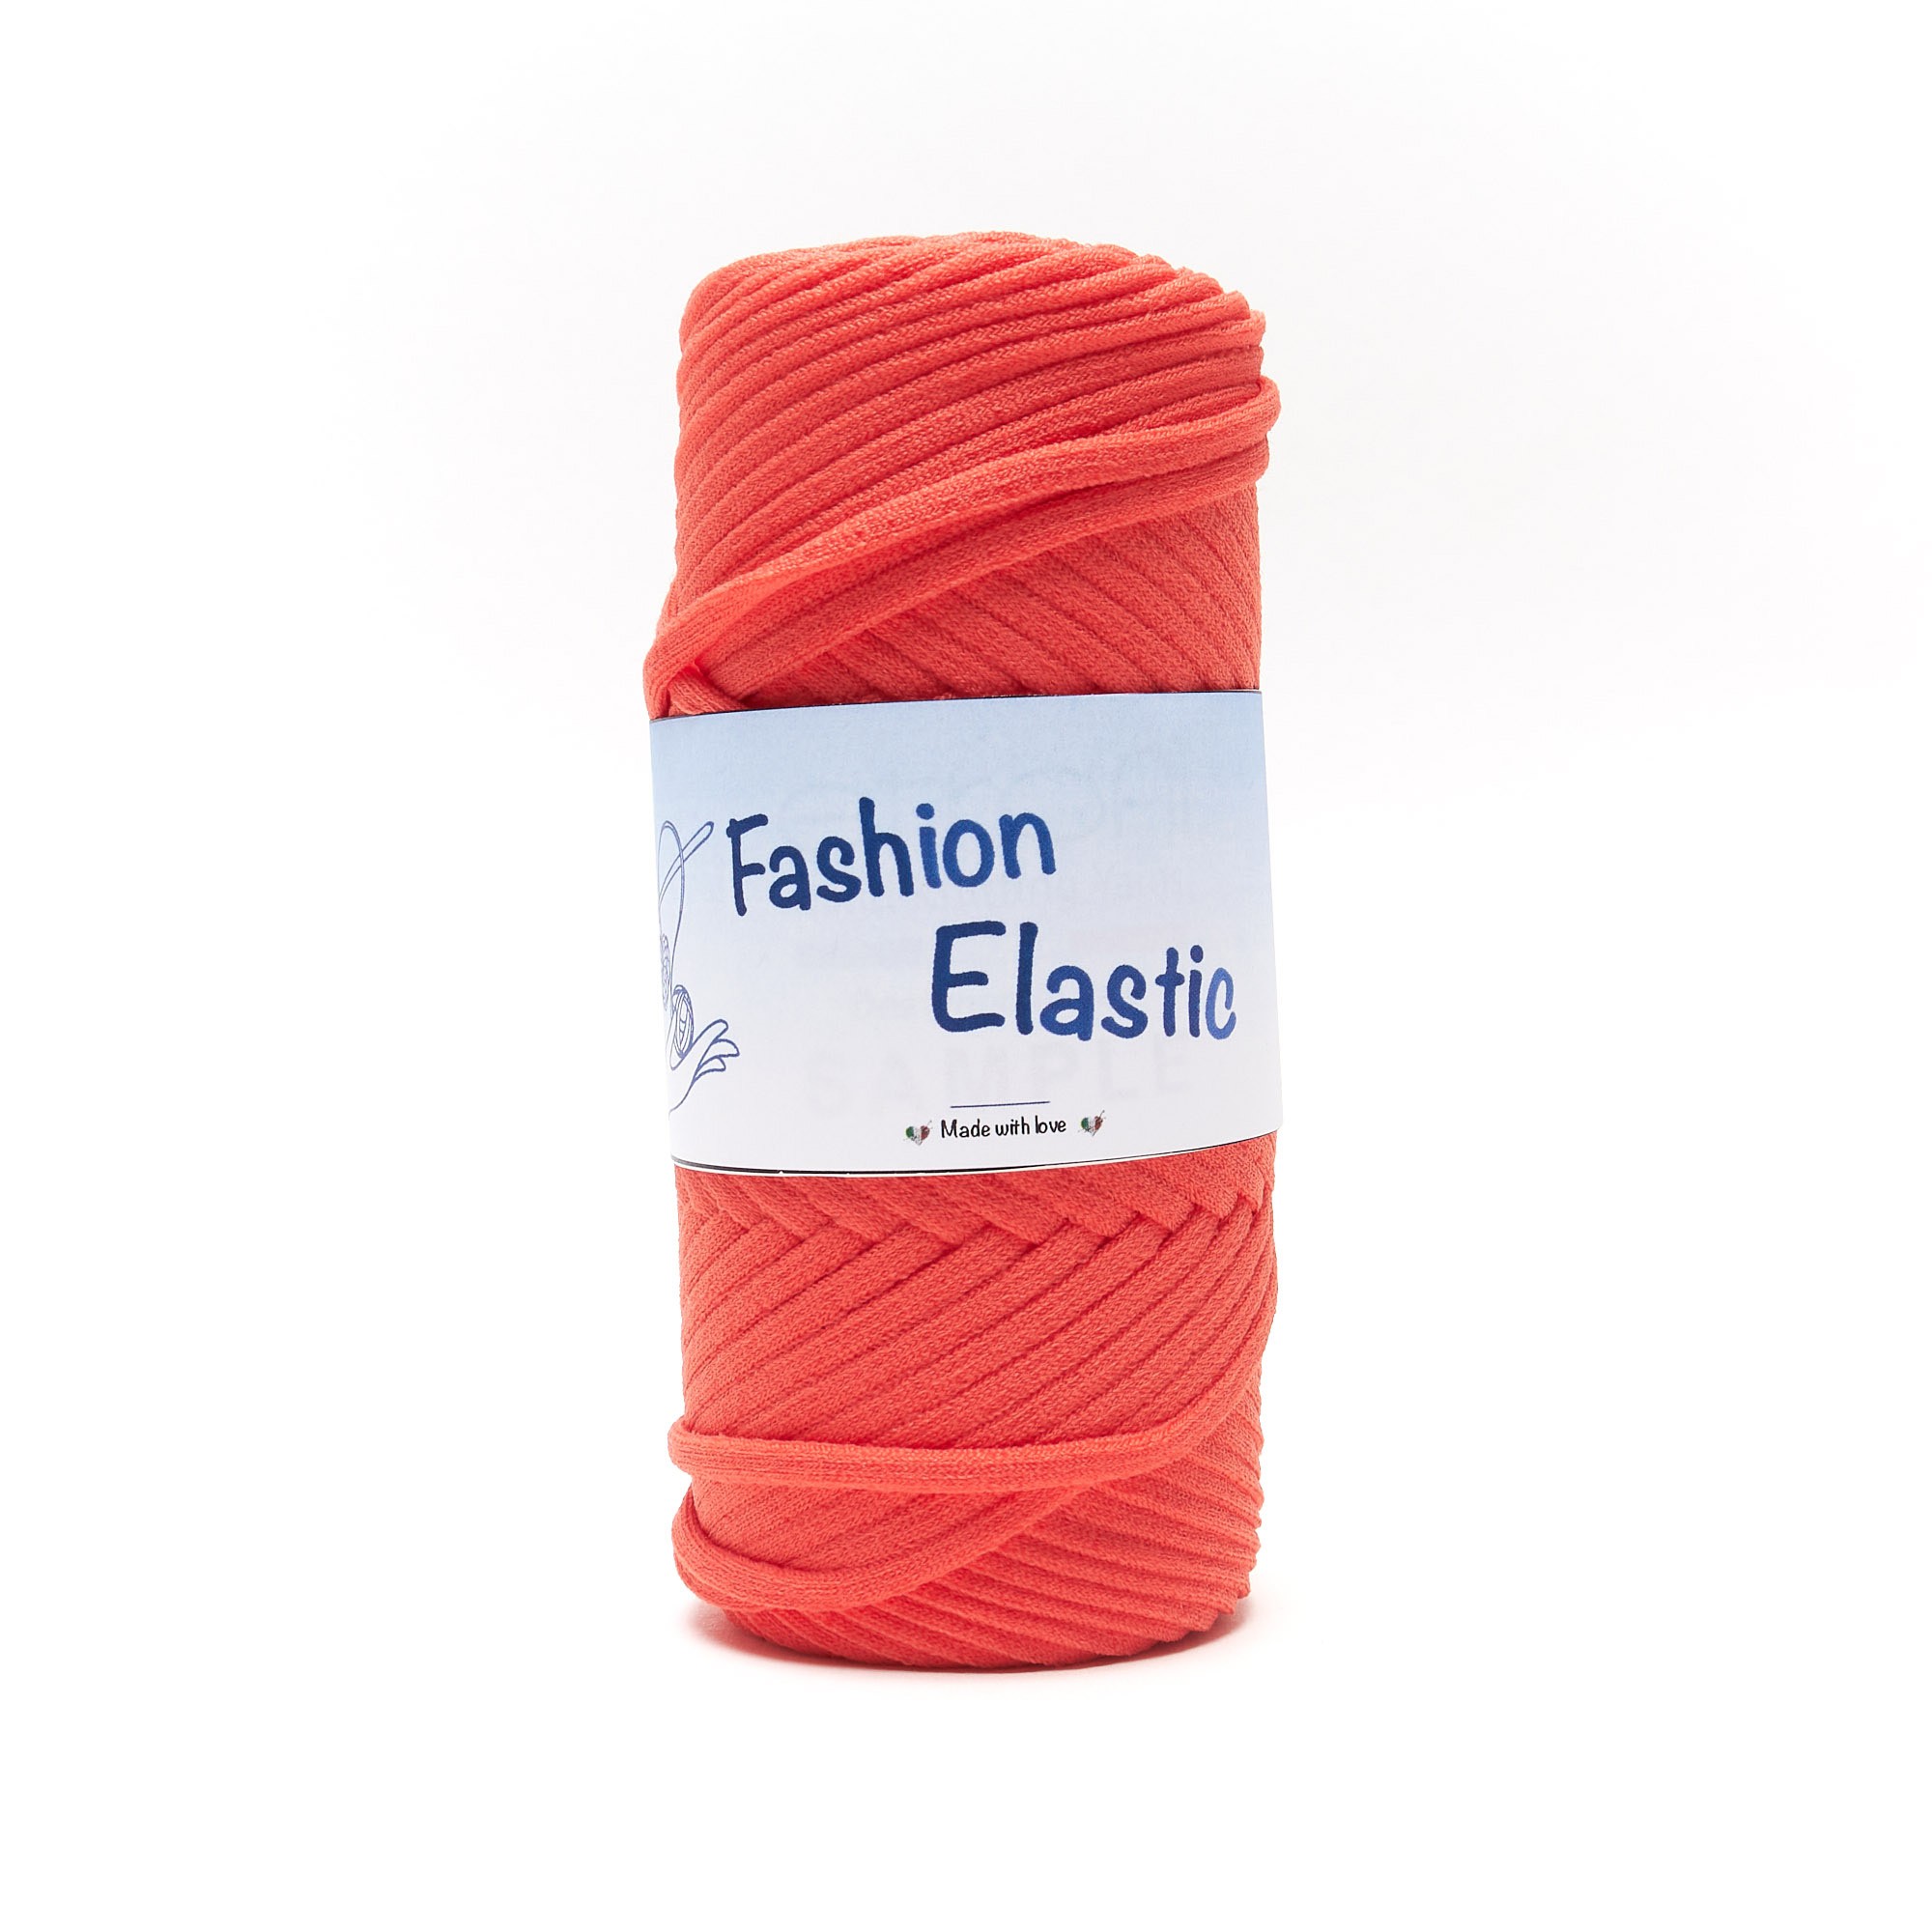 Elastic Fashion by Woolove - Fettuccia Elastica Piatta - Tricot Cafè